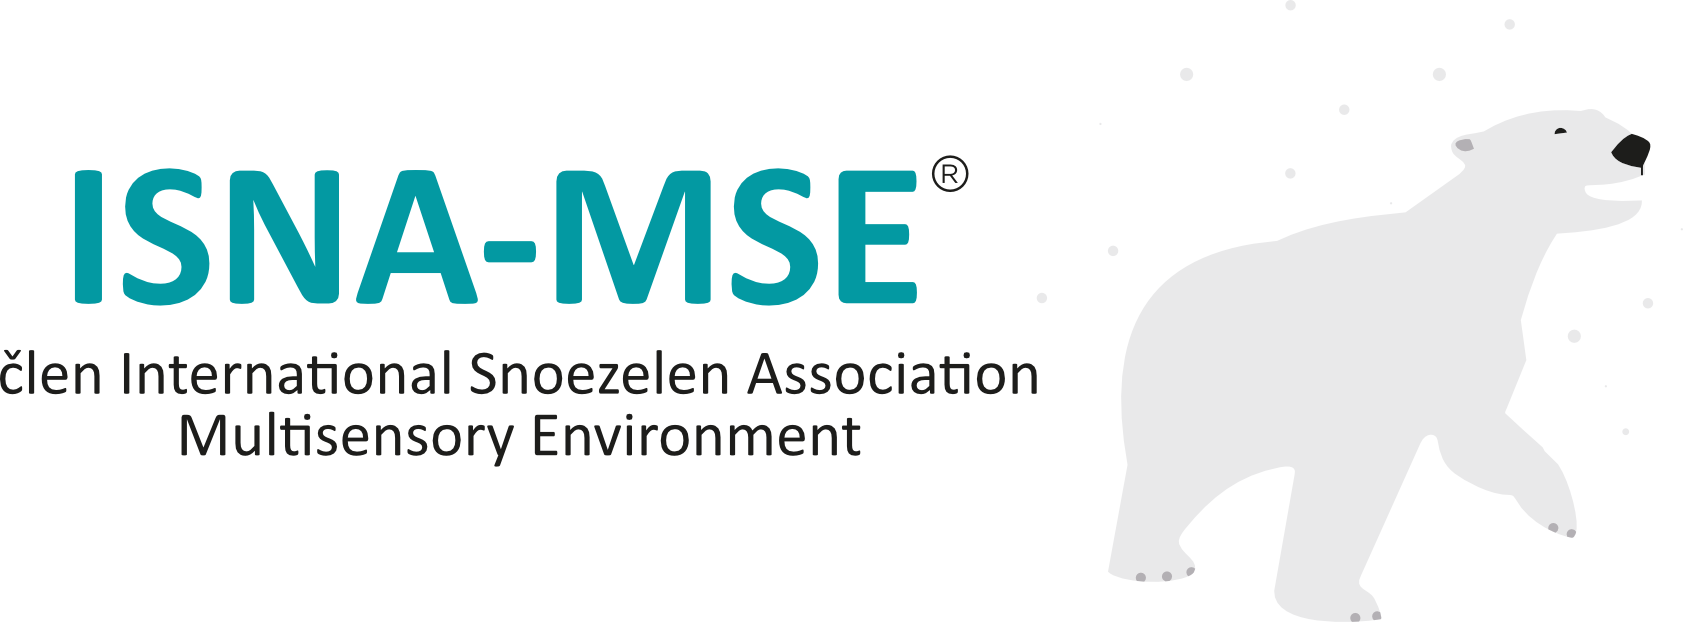 logo-isna-mse-medvedice